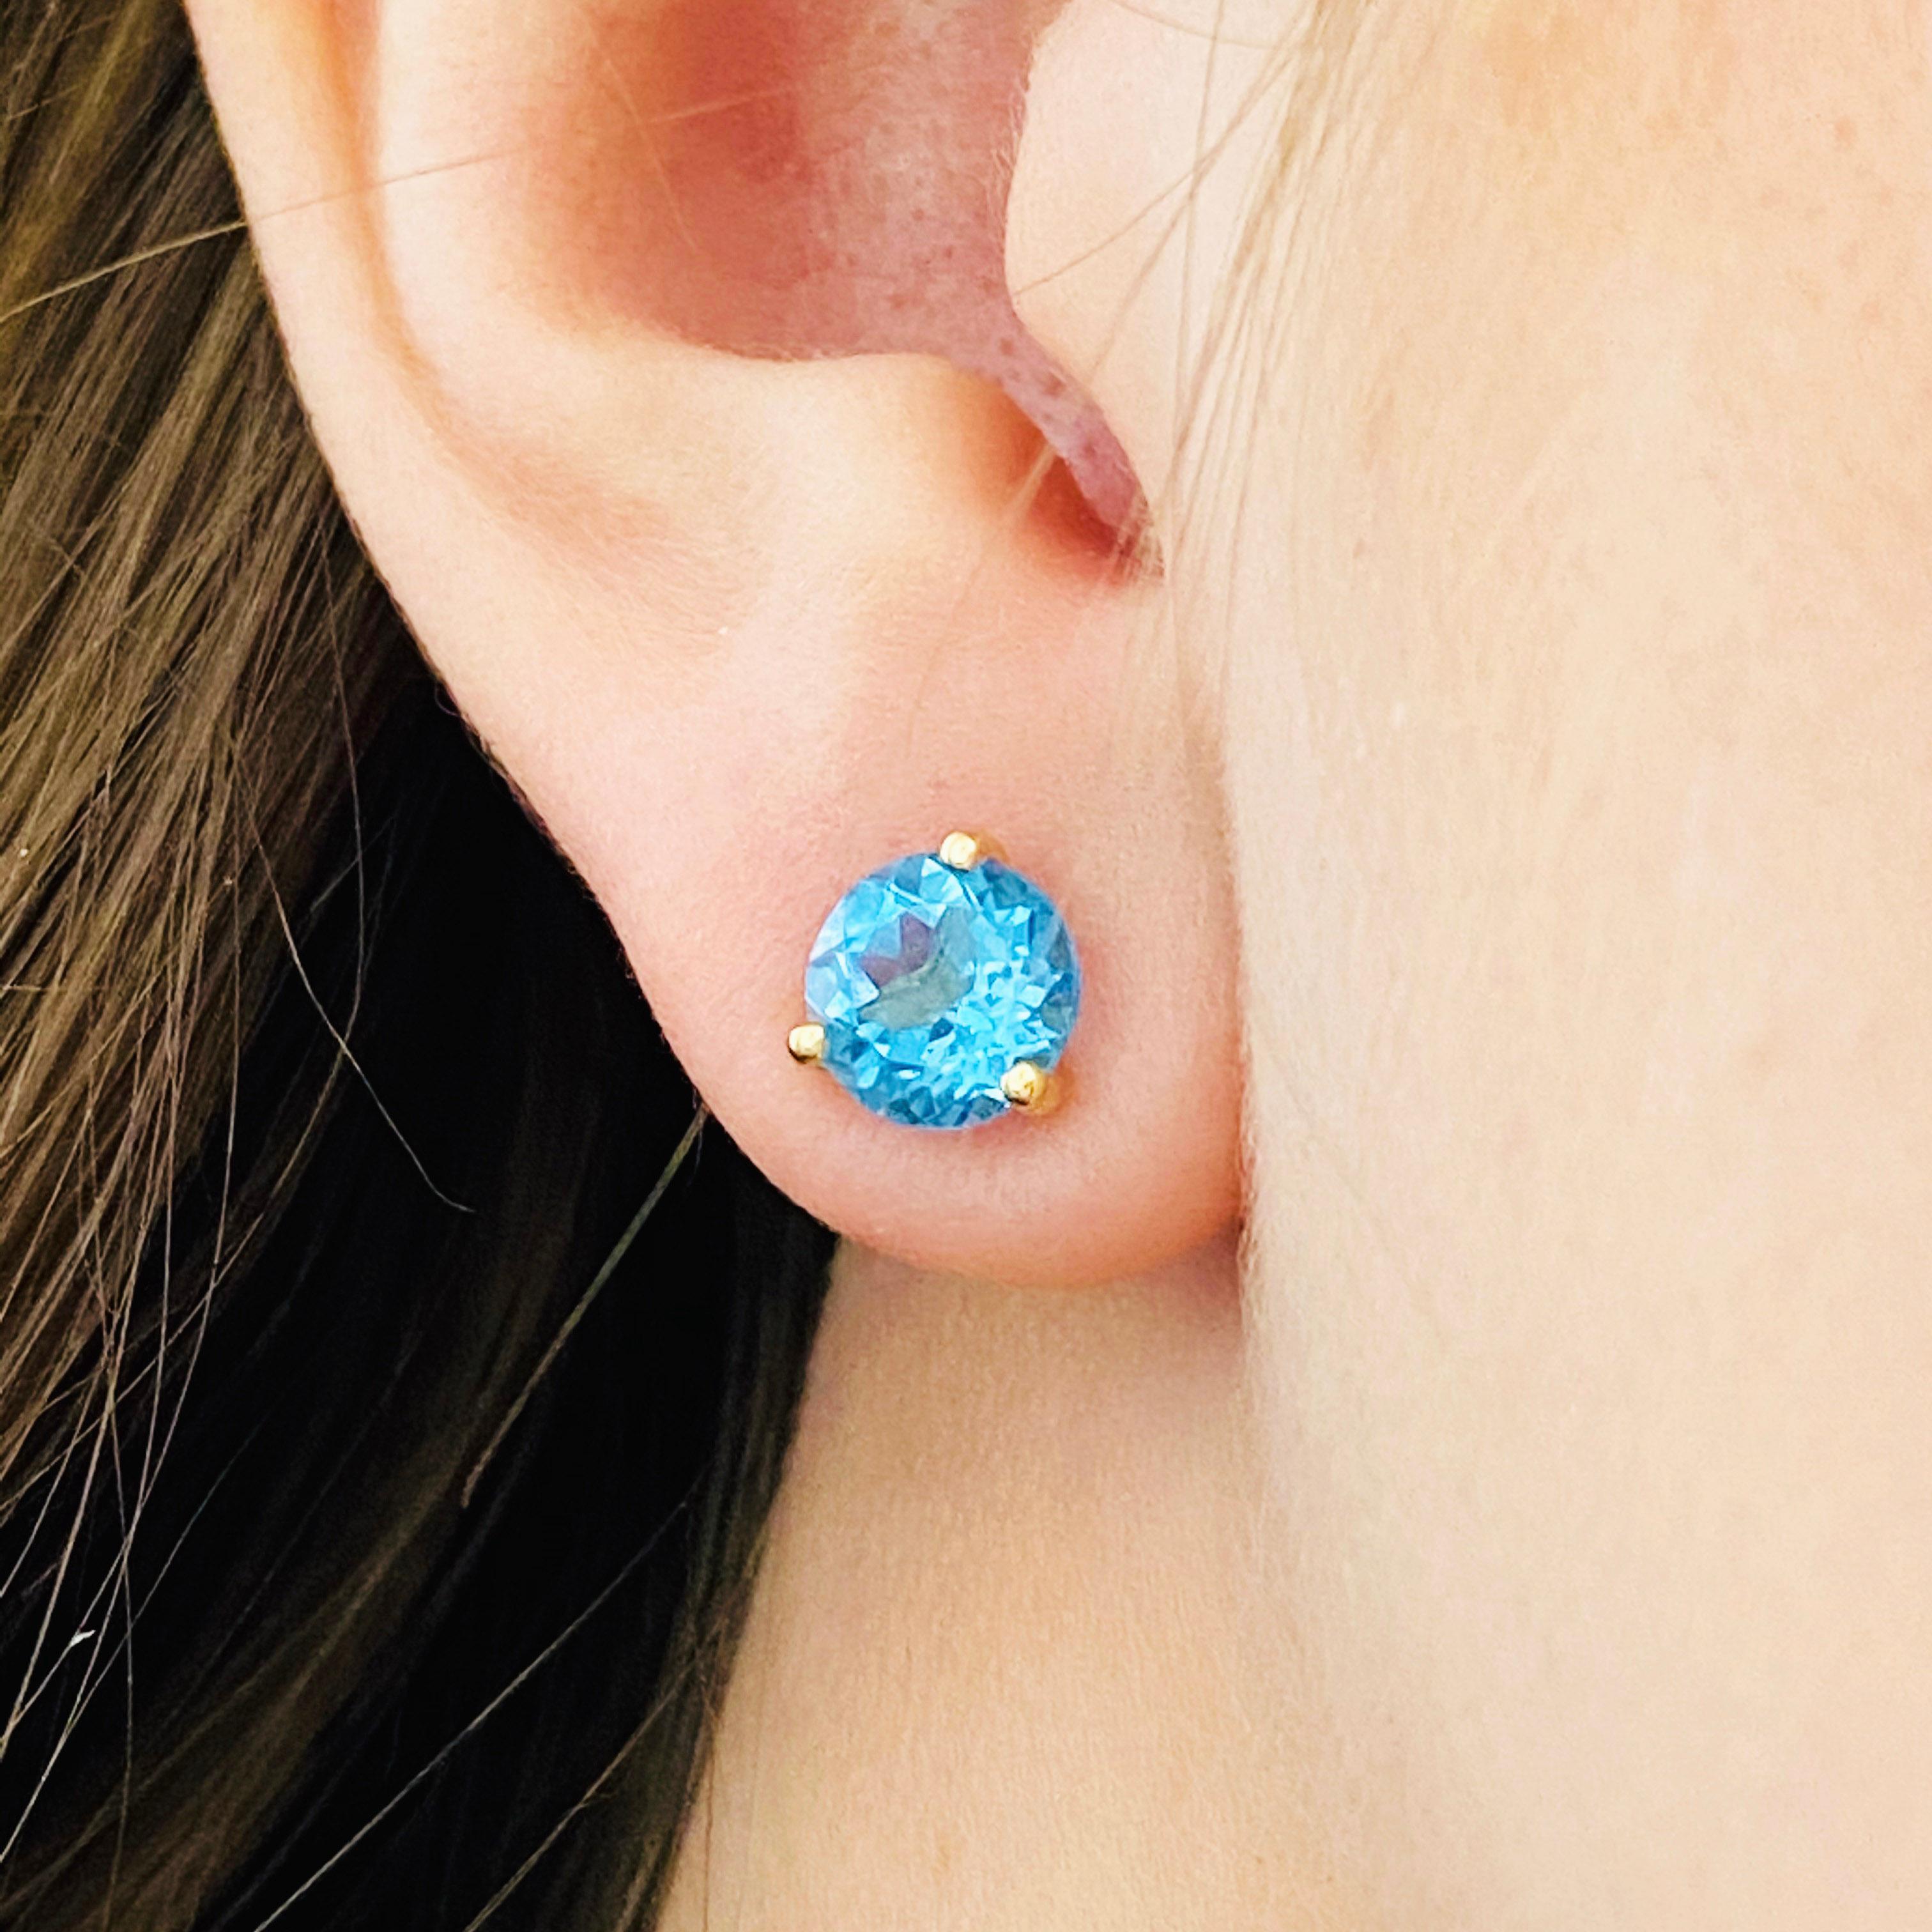 Stunning Bright Blue Topaz Earrings details below:
Metal Quality: 14K Yellow Gold
Gemstone: Blue Topaz
Stone Measurements: 6.81mm/.27in
